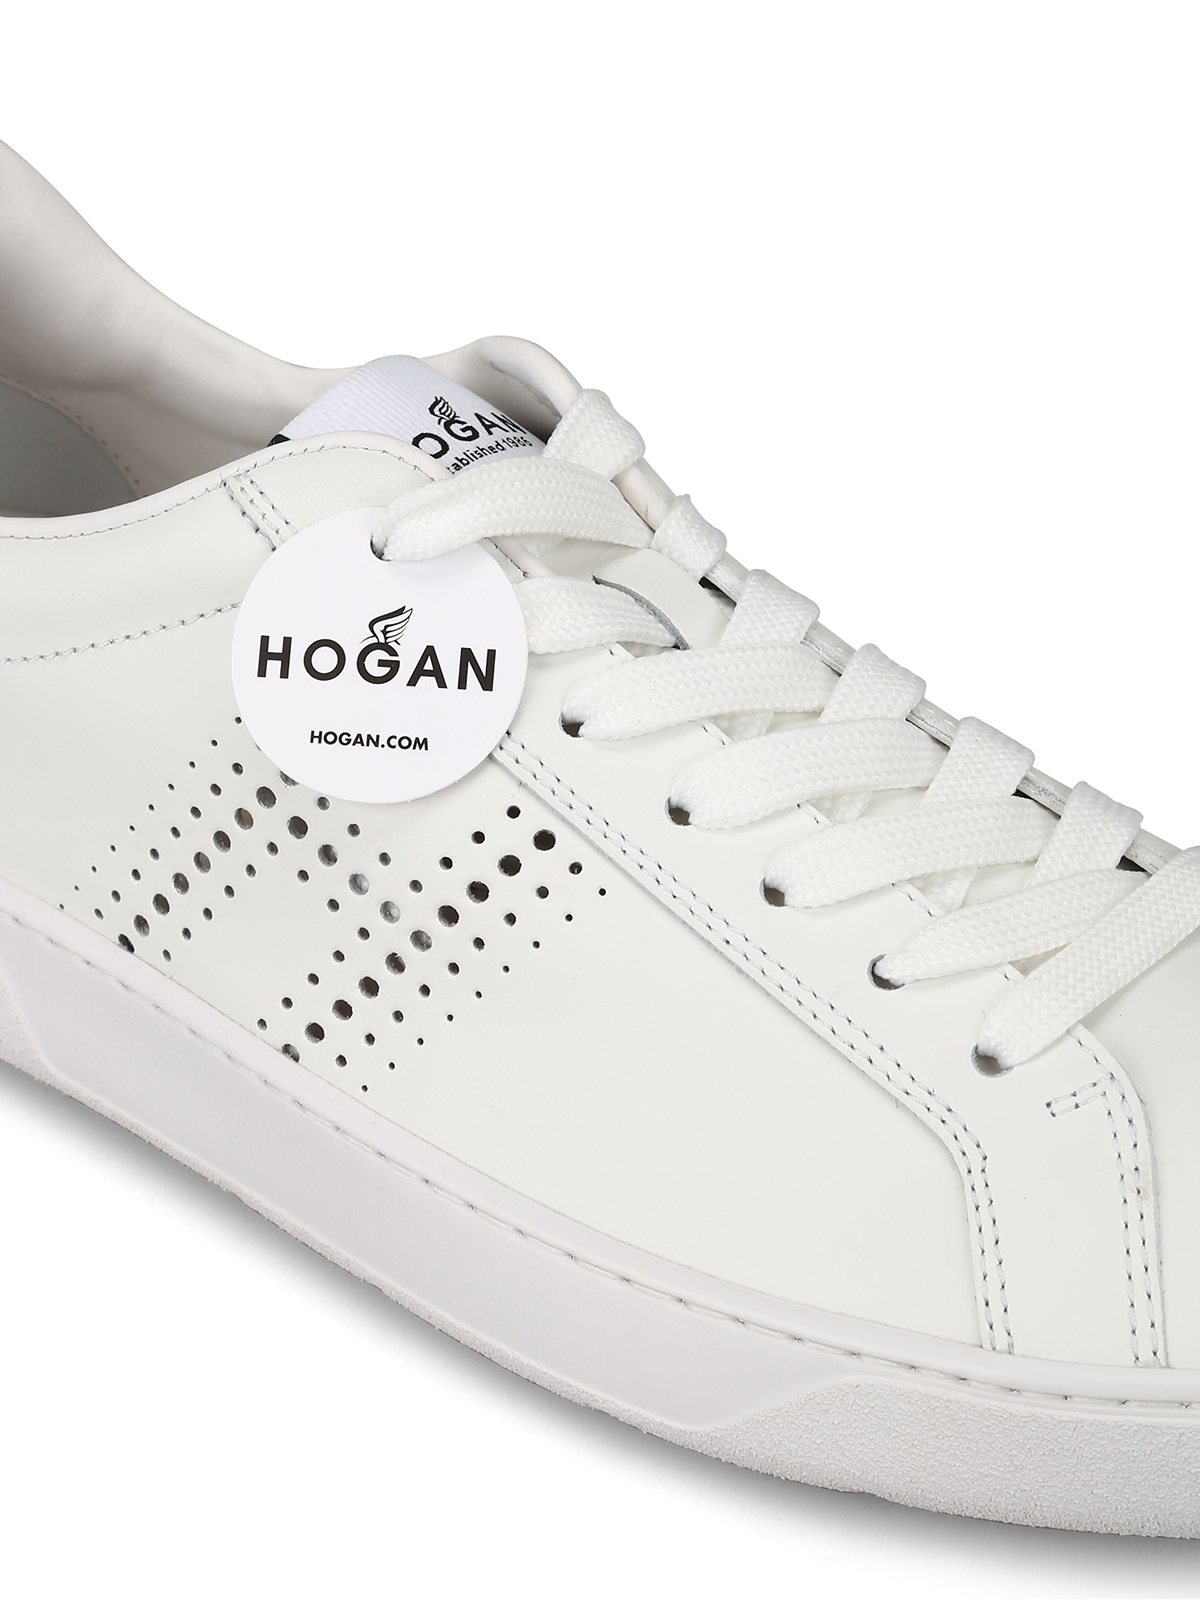 Buy > hogan sneakers uomo > in stock